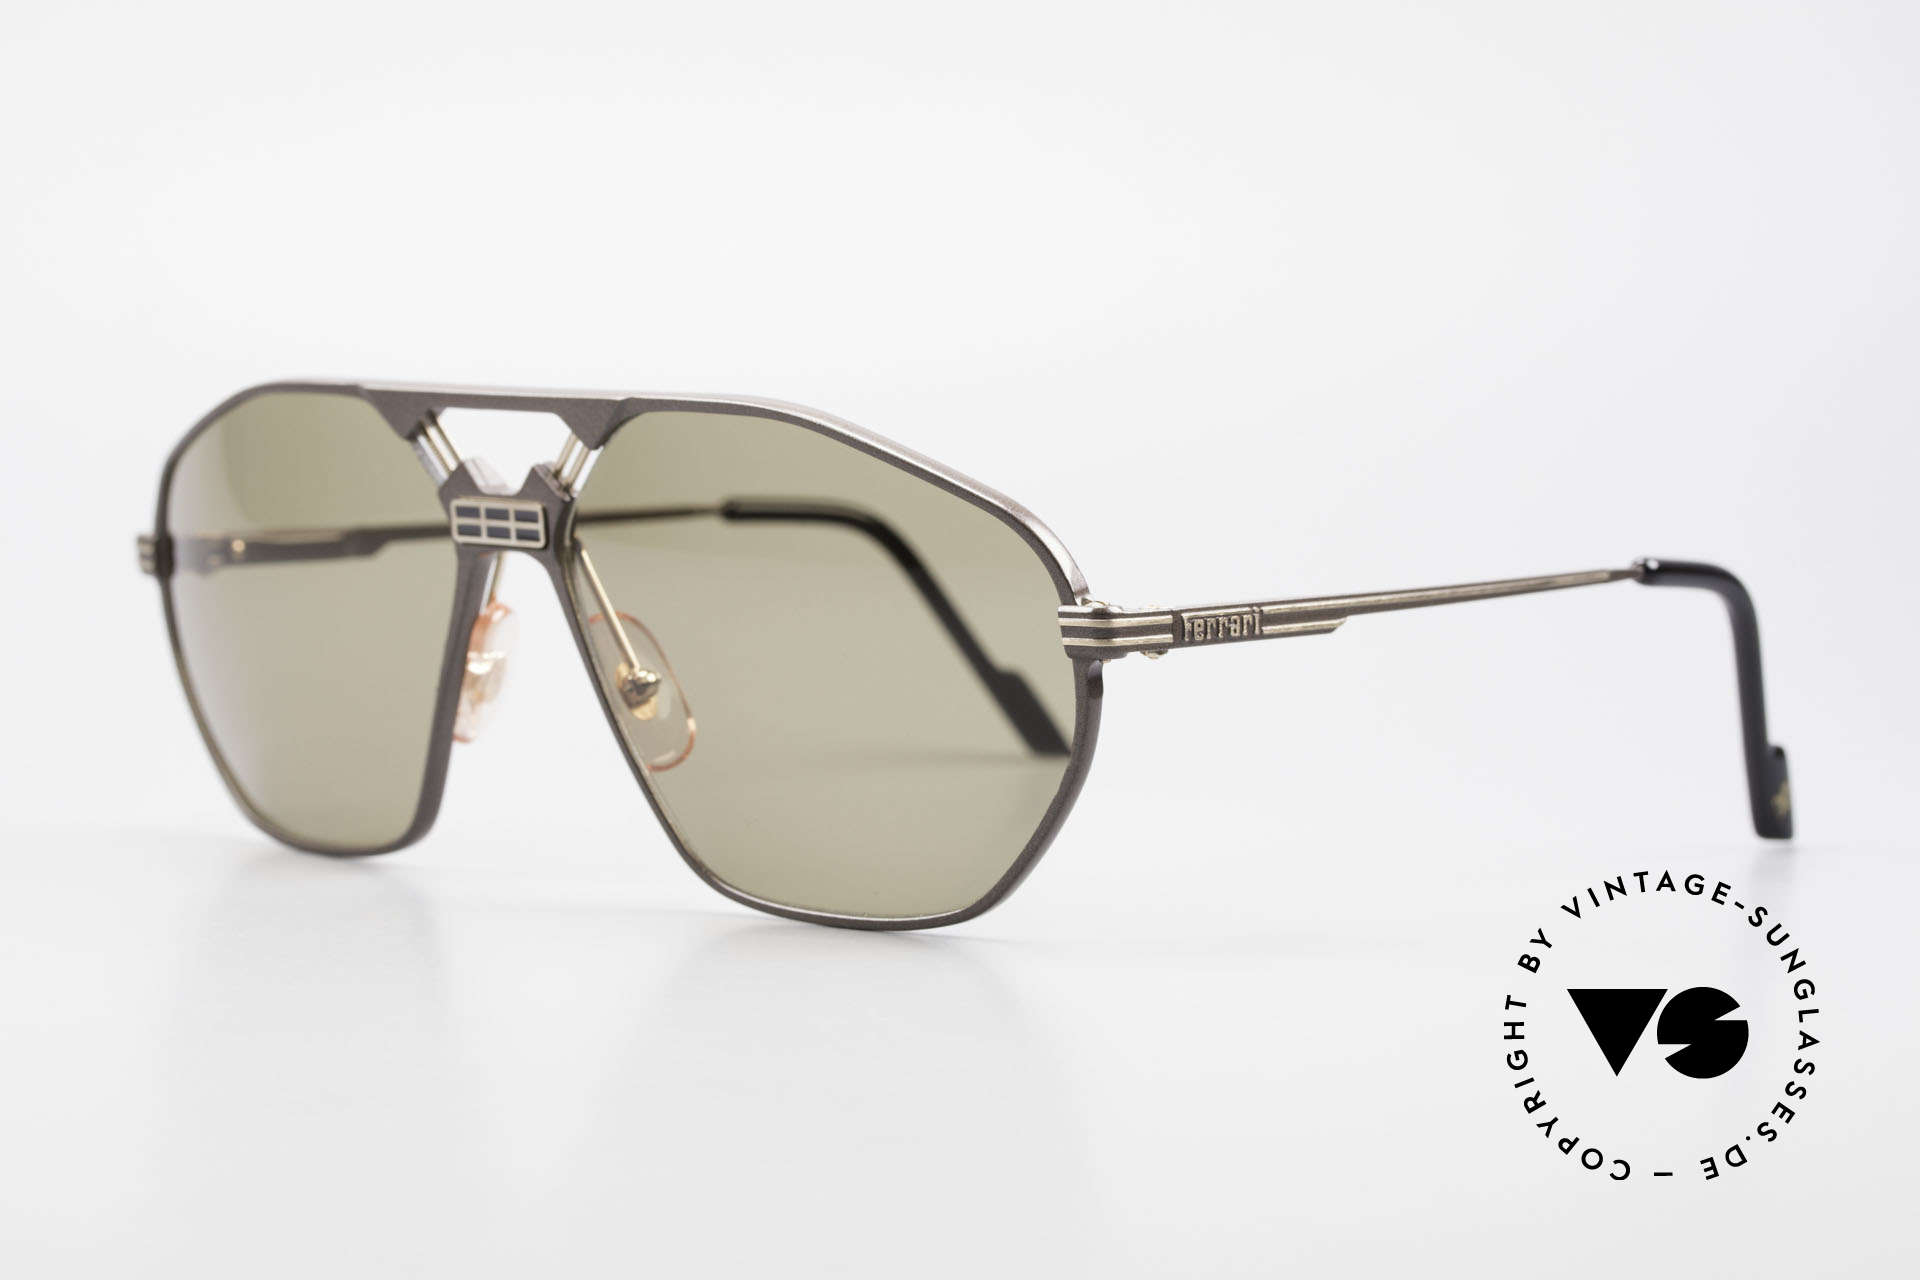 Ferrari F22/S Men's Rare Vintage XL Shades, modified "aviator sunglasses"; flexible spring hinges, Made for Men